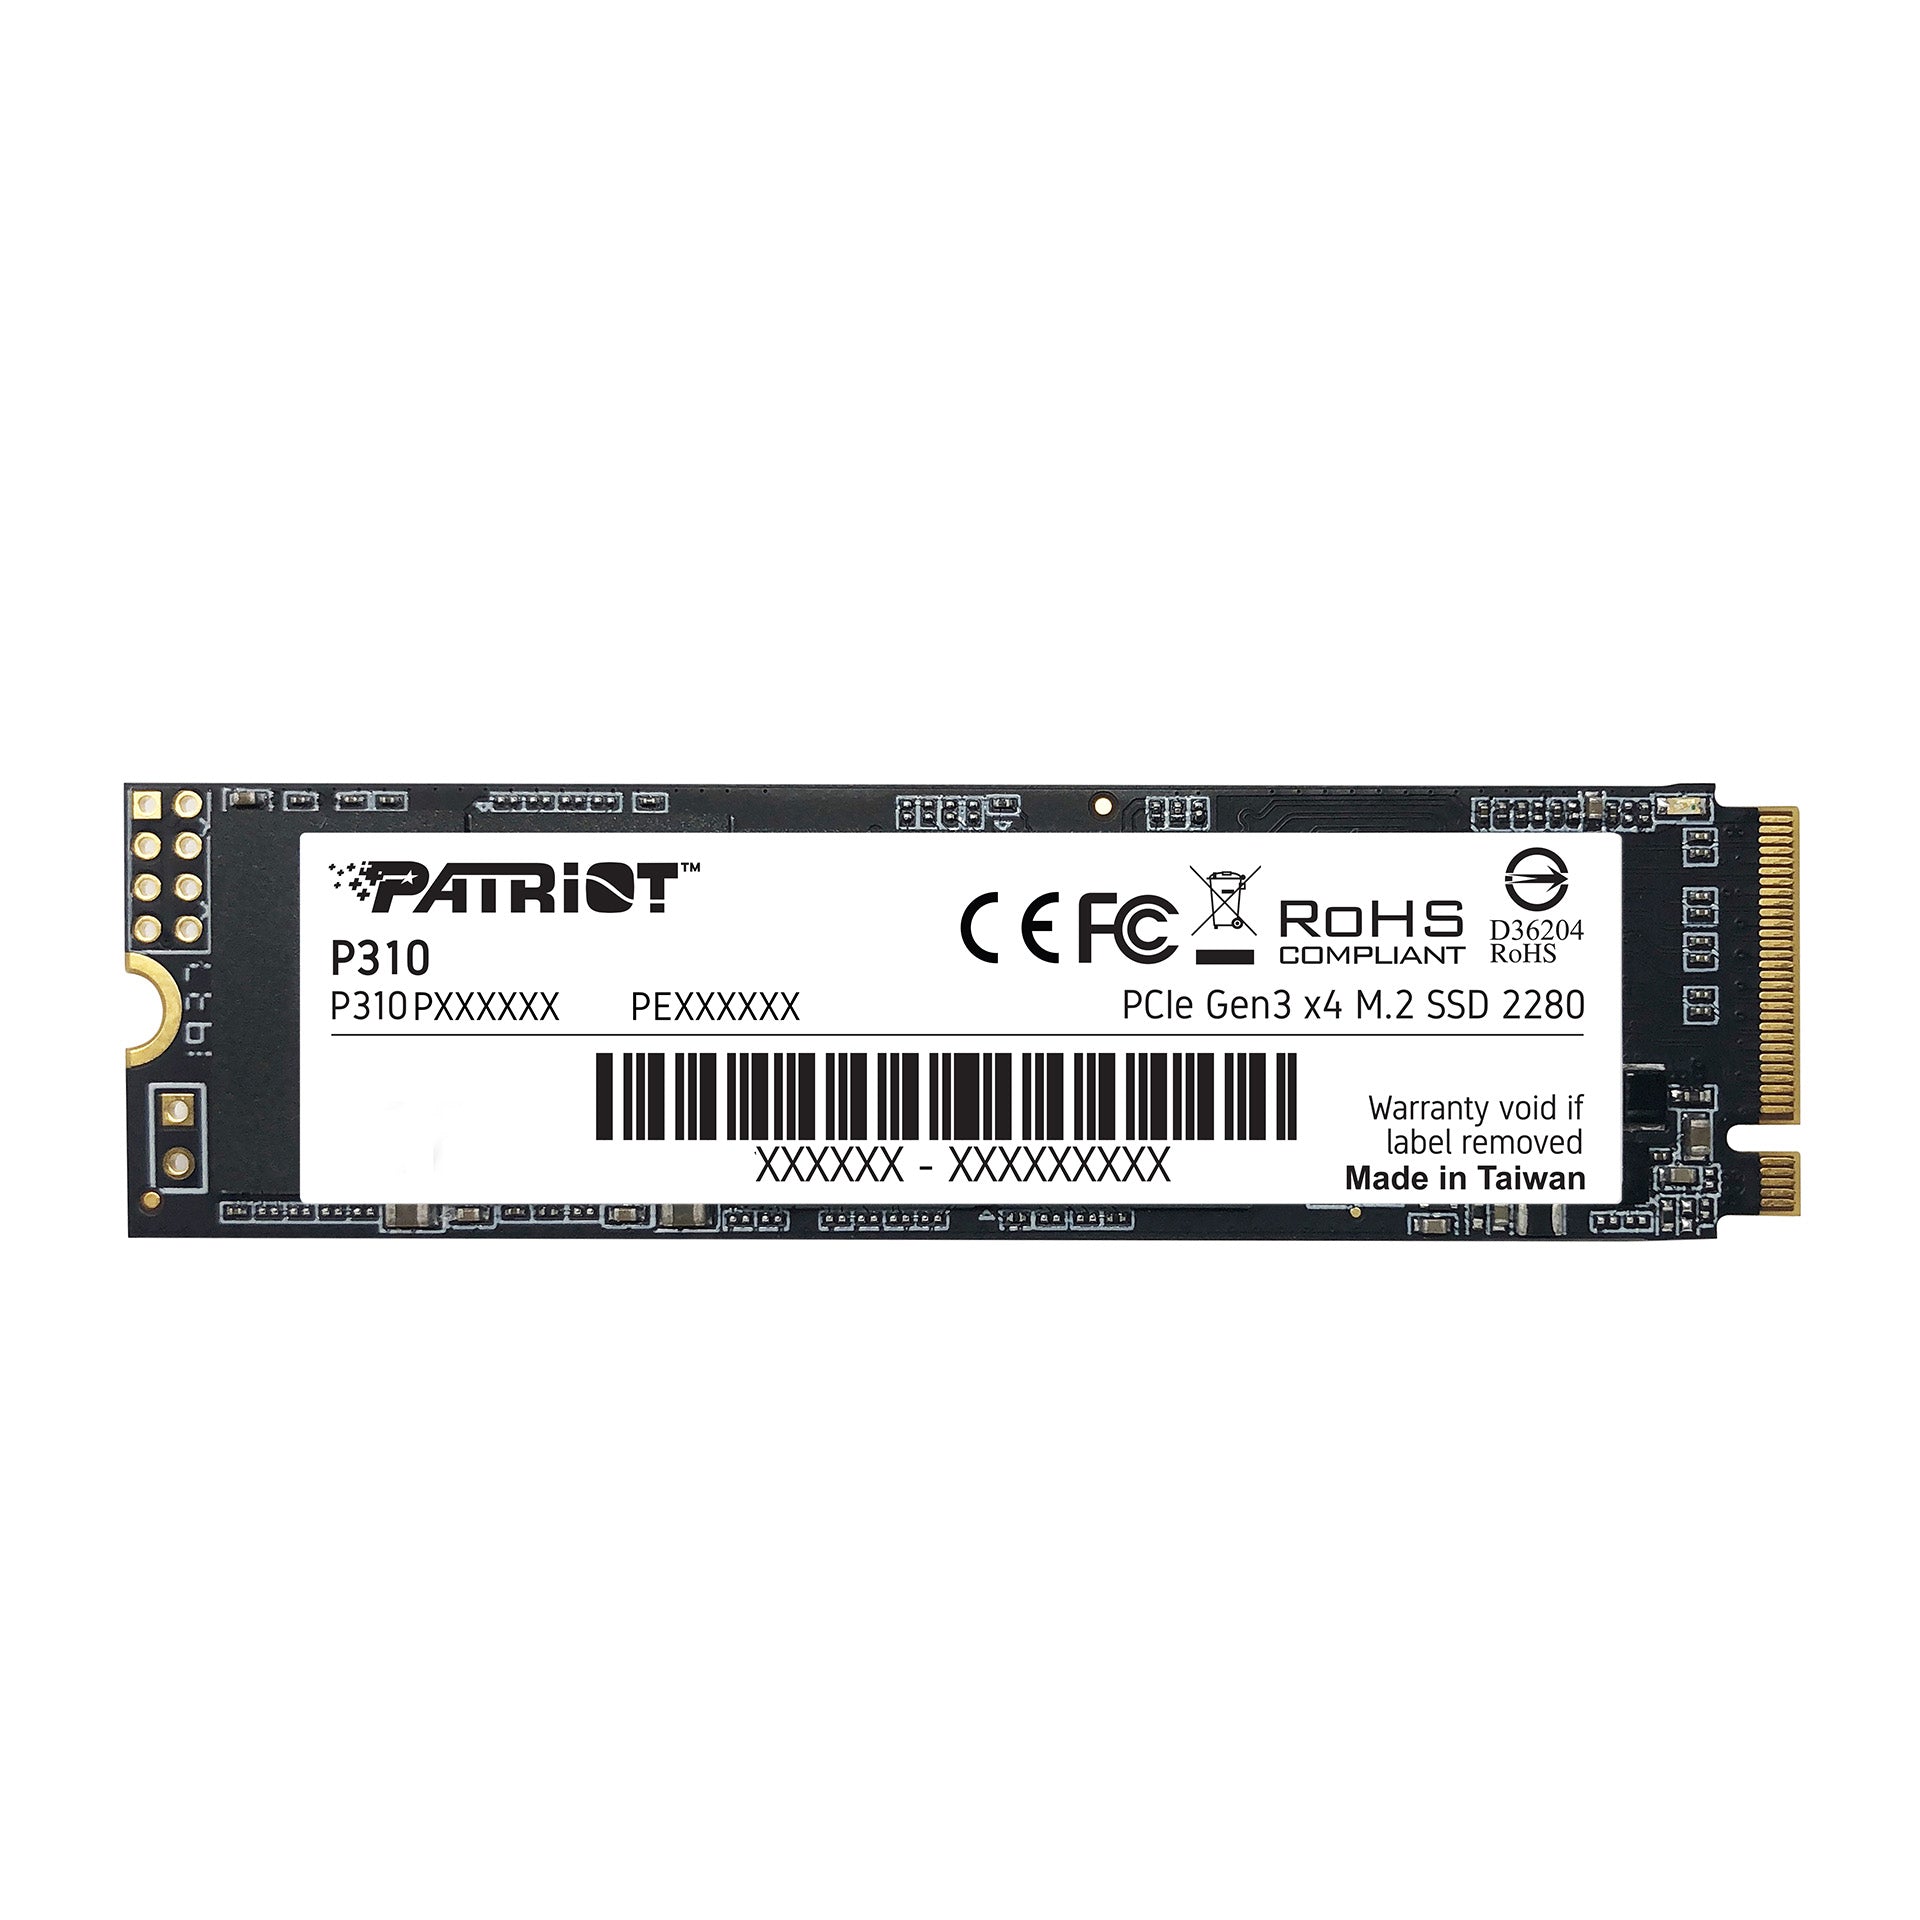 Disque Dur Interne Patriot SSD P220 SATA III 2.5 / 2 To